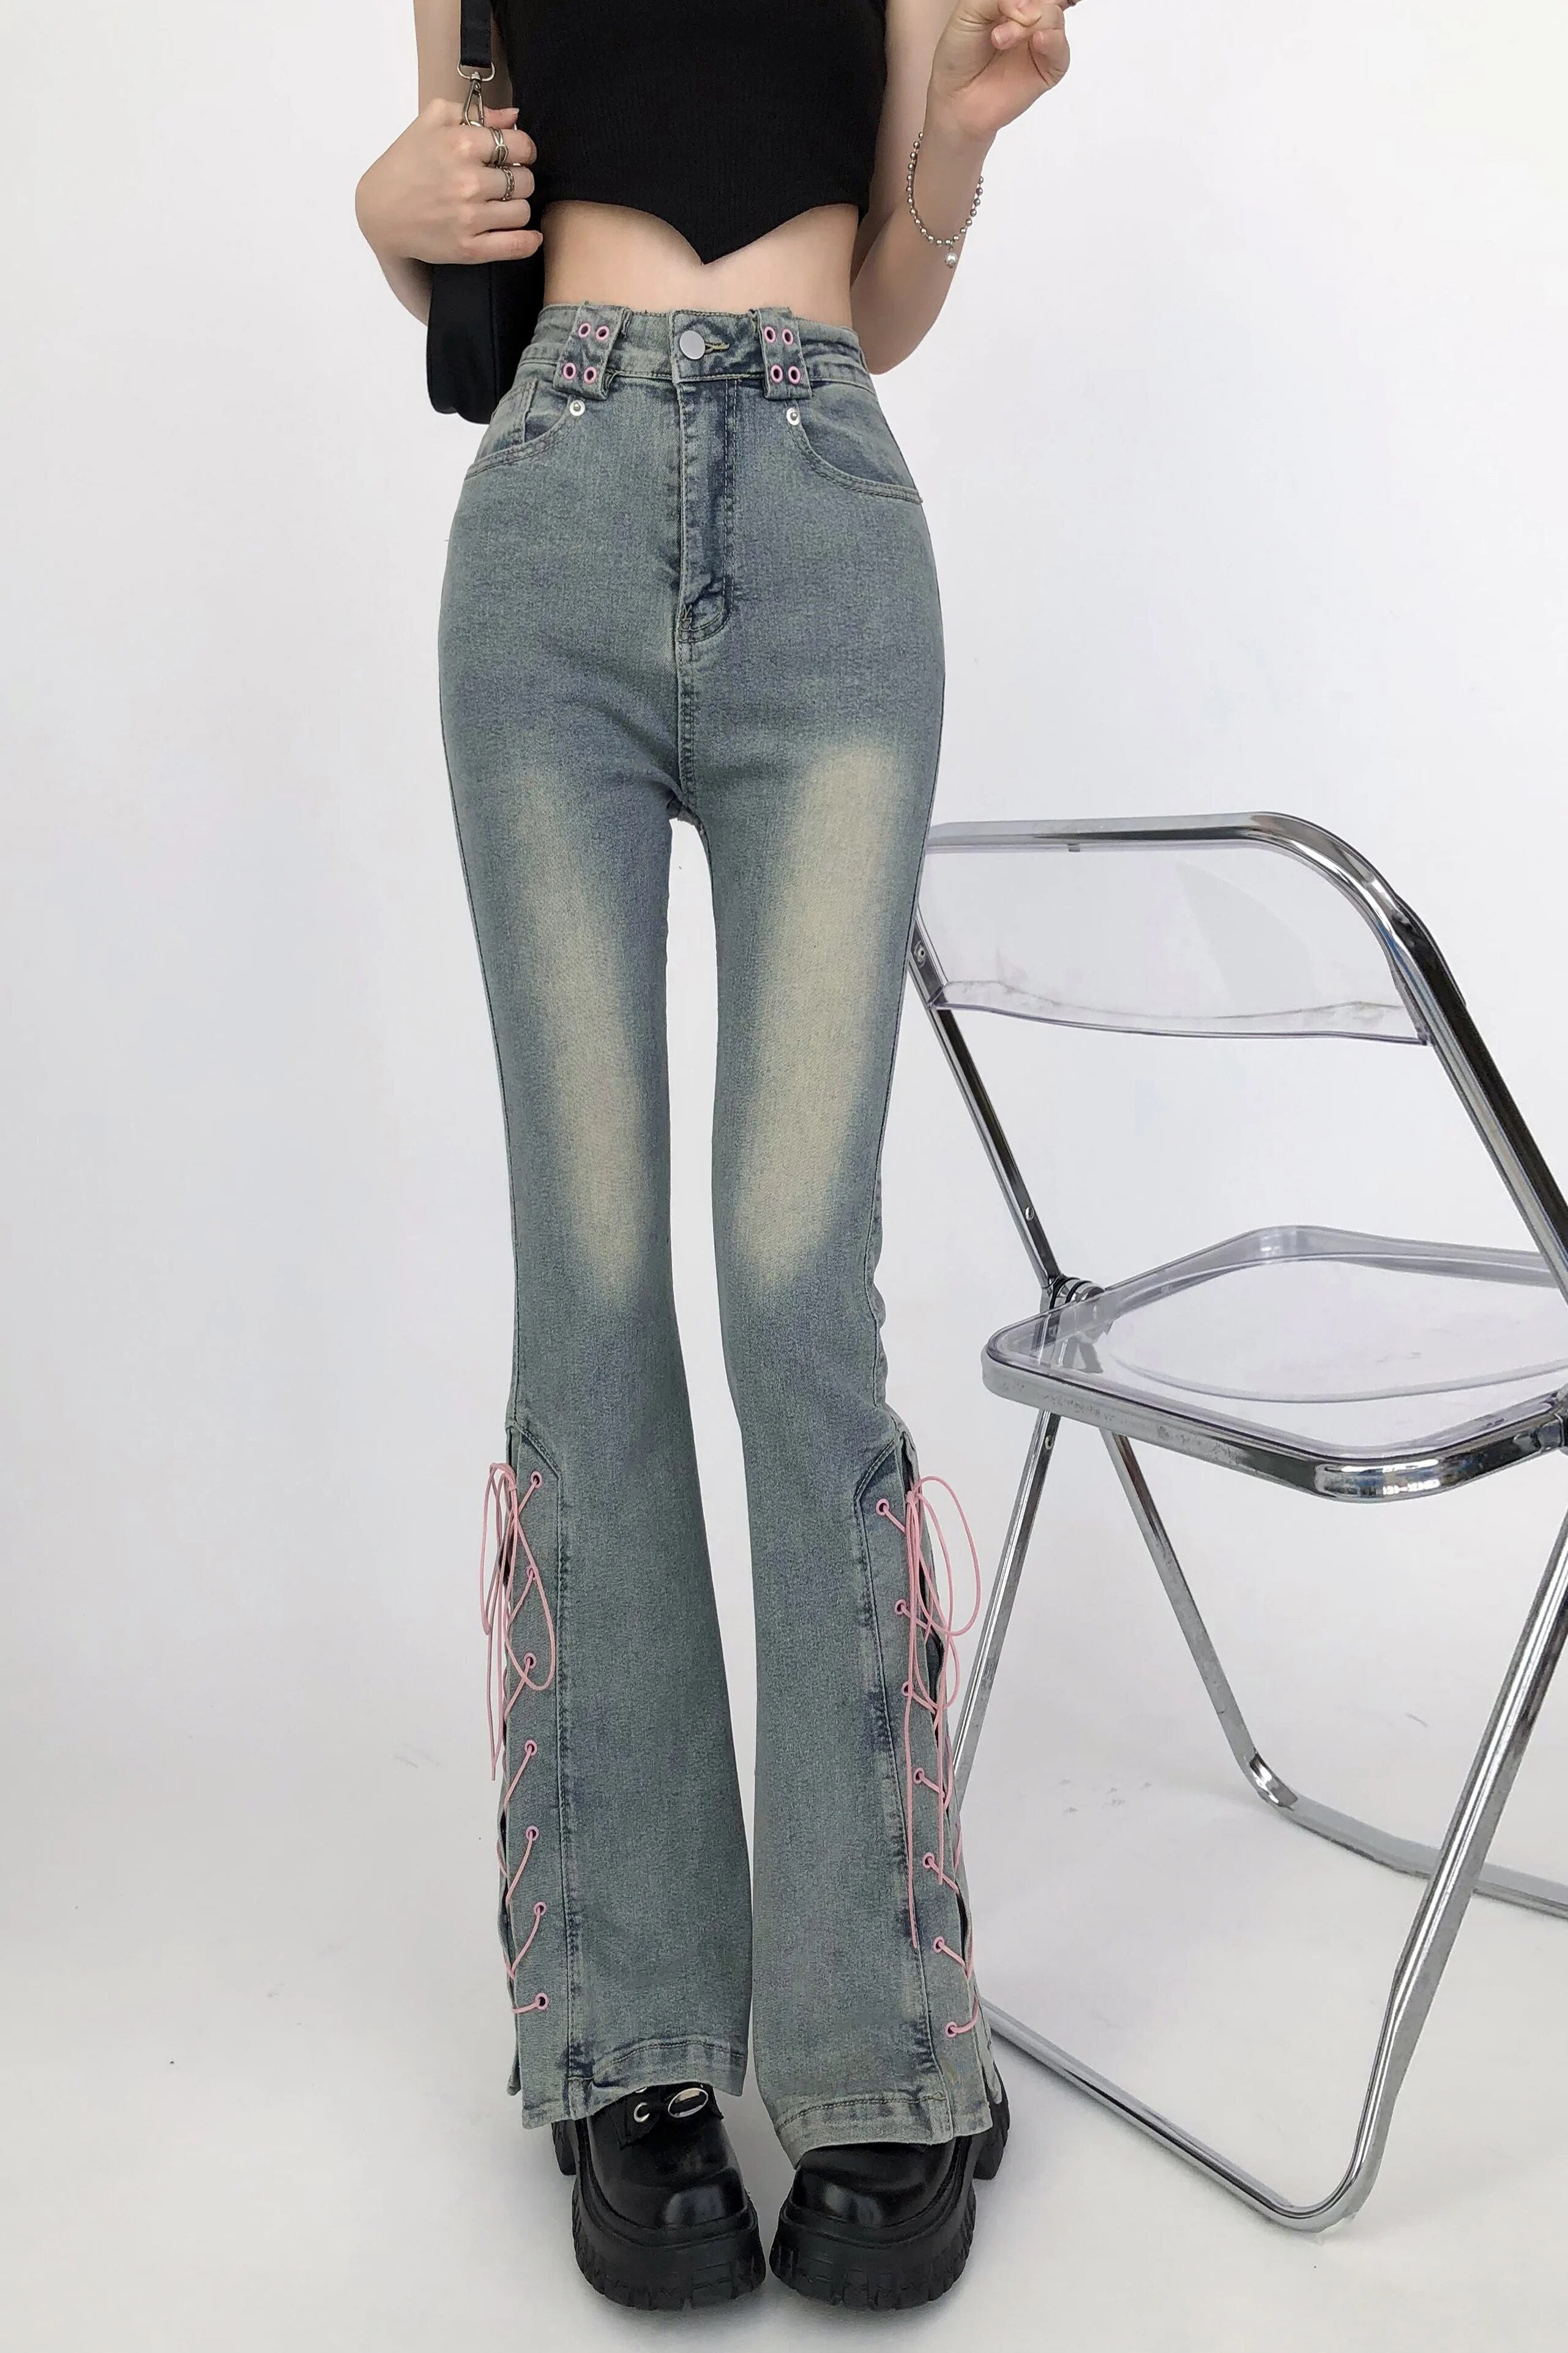 Lace-up High Waist Slim Fit Jeans Pants - INTOHYPEZONE